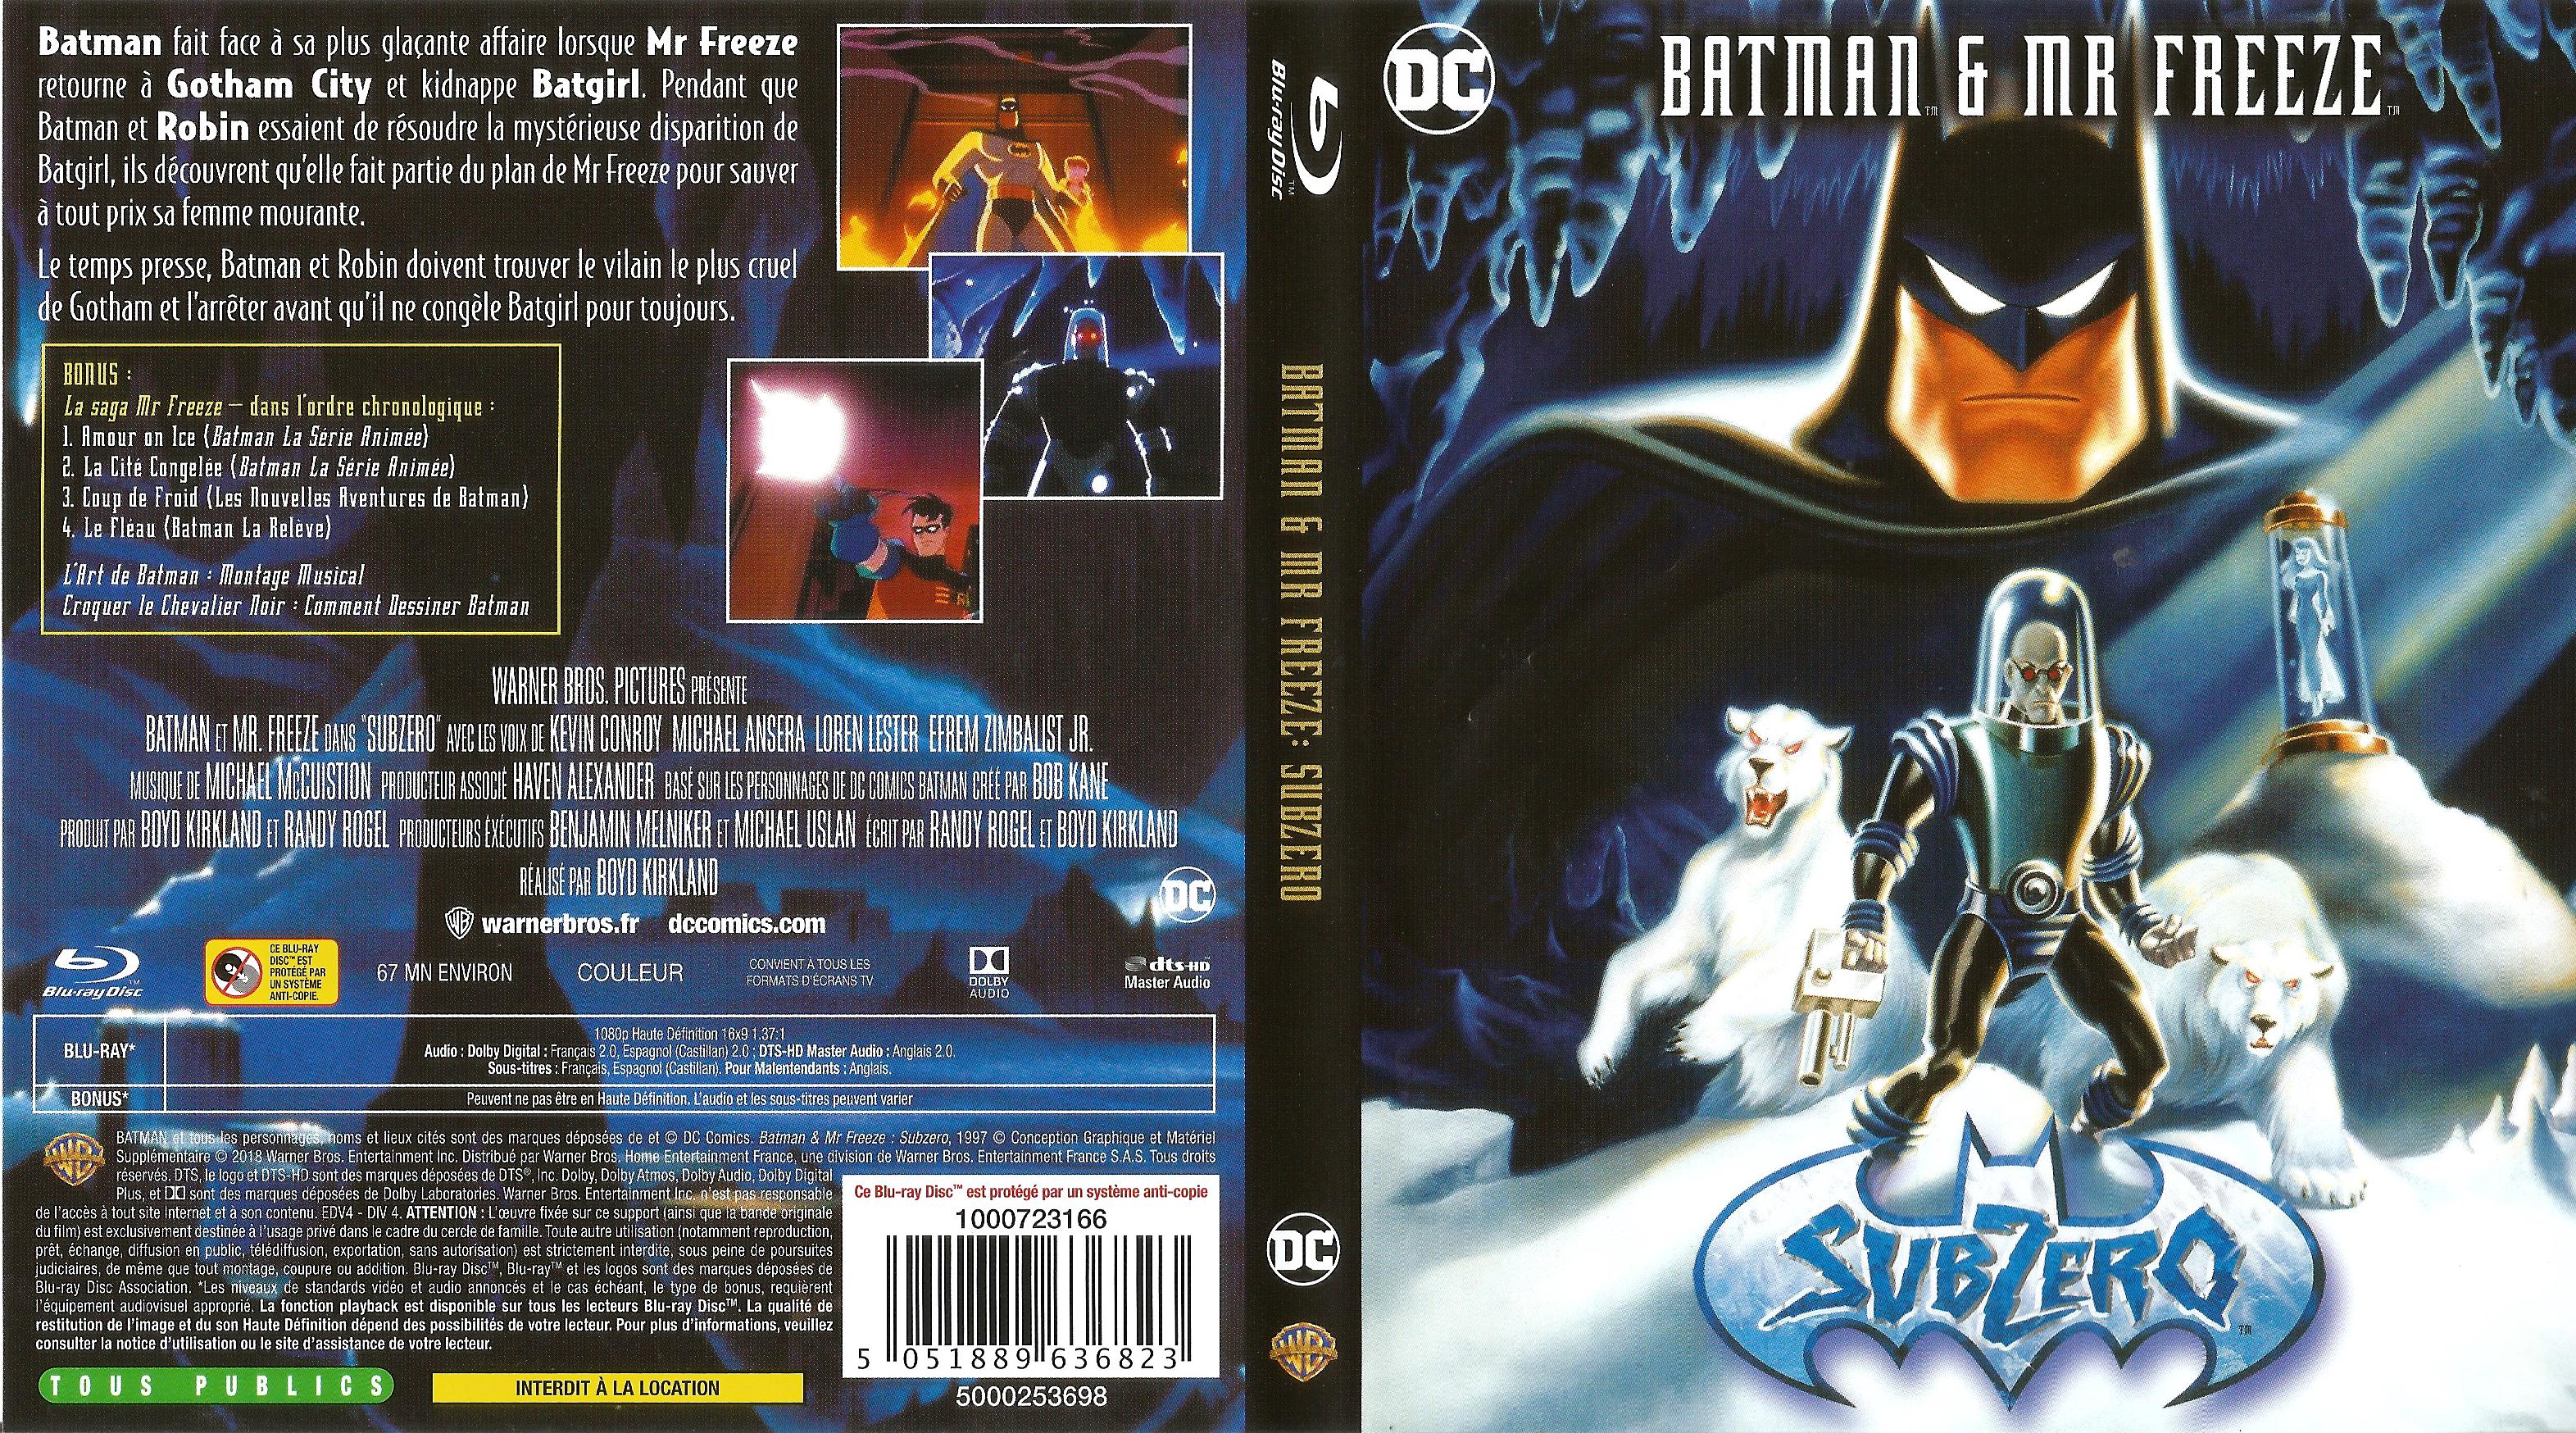 Jaquette DVD Batman & Mr Freeze SubZero (BLU-RAY)